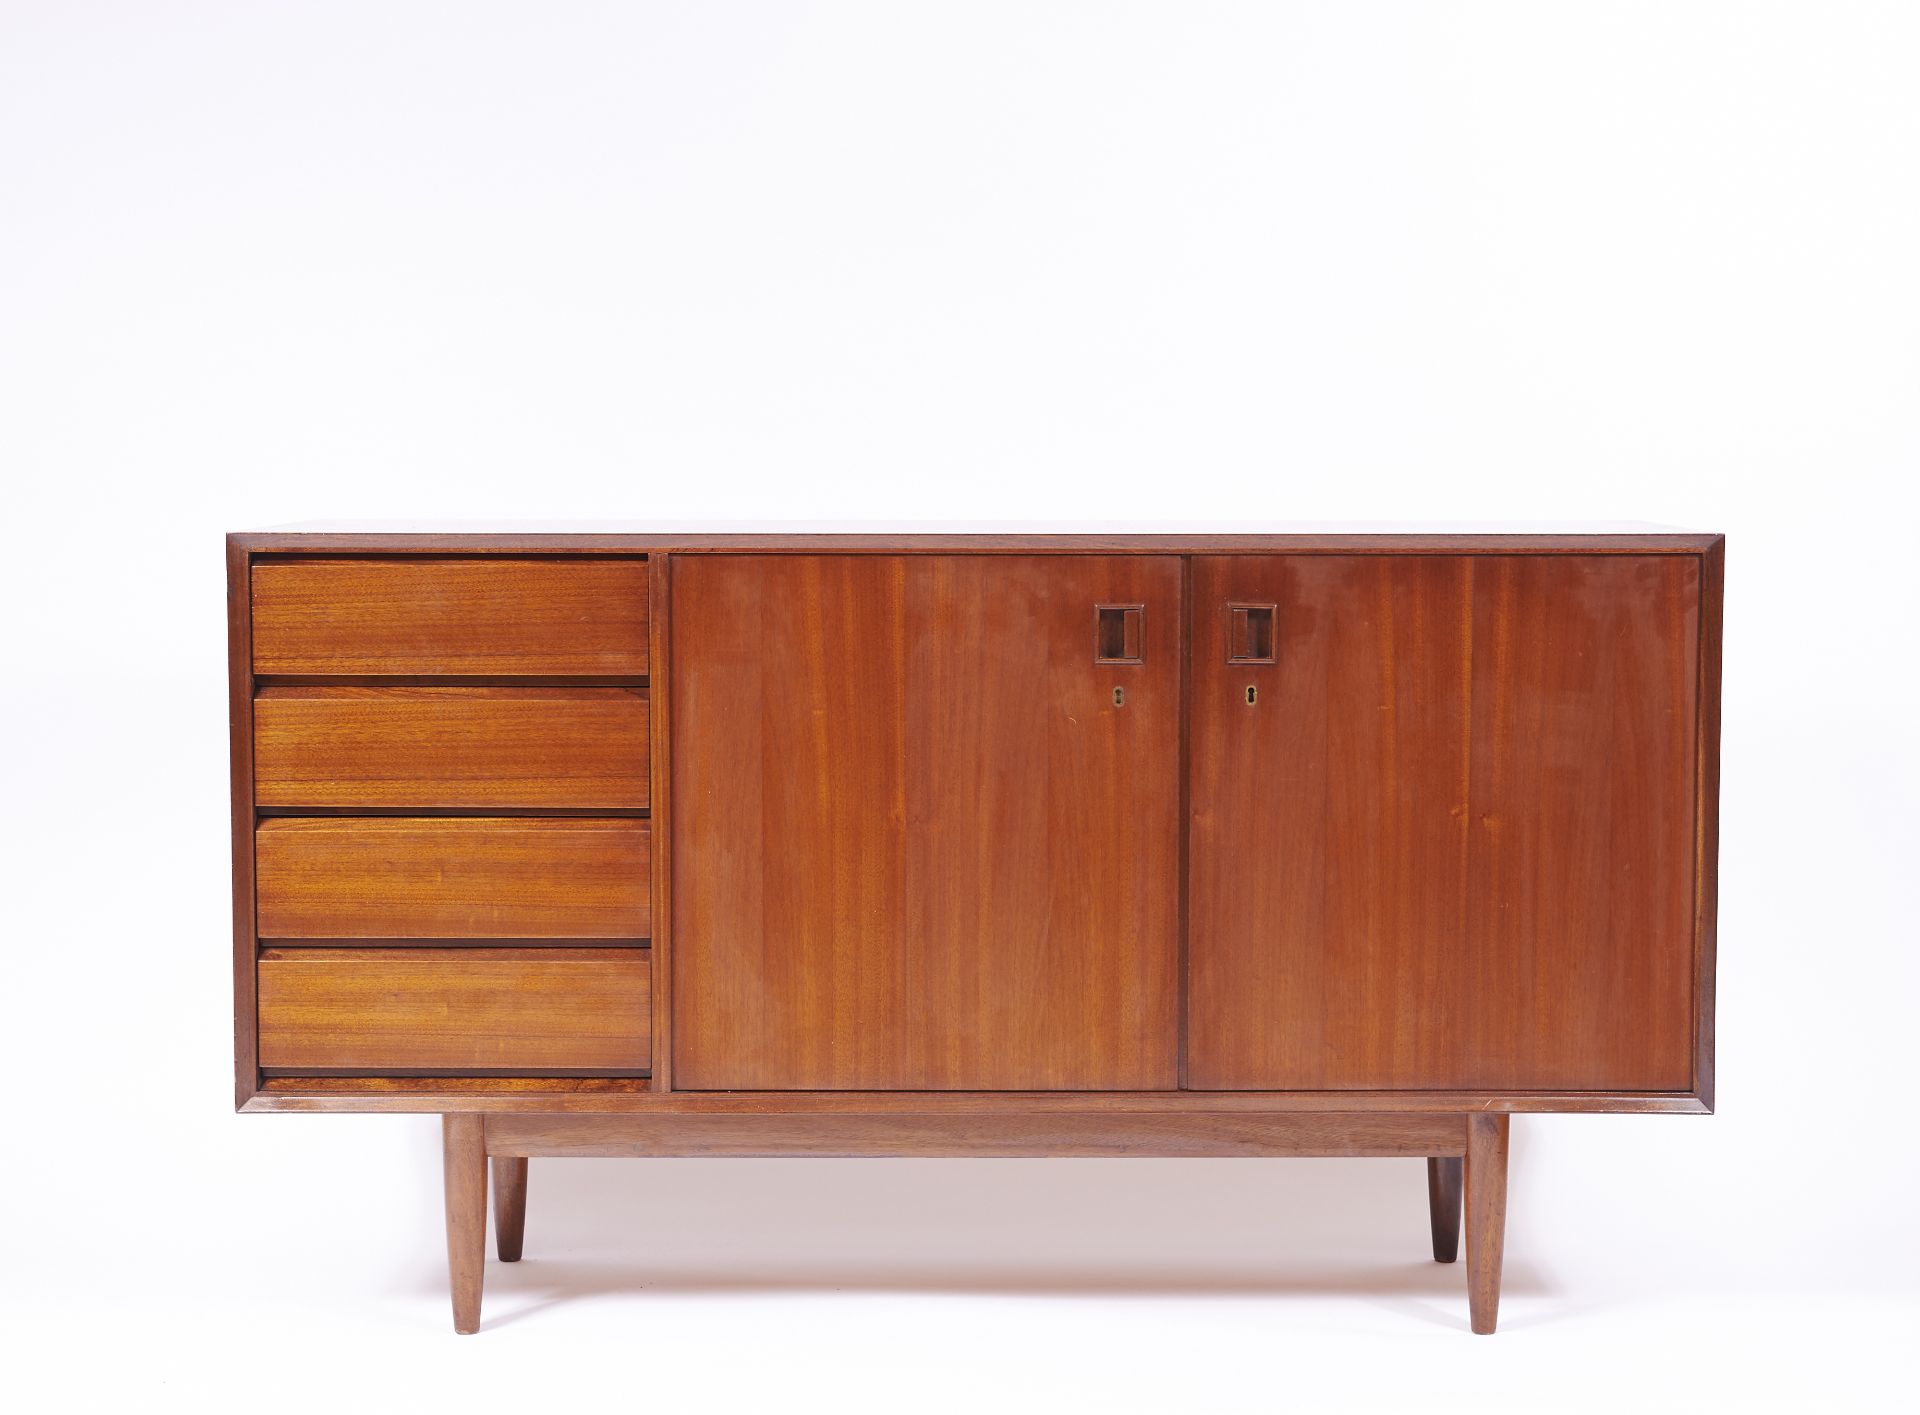 "A Sideboard mahogany and mahogany veneer Portuguese 20th C. (the 60s) model "Caravela" by JOSÉ